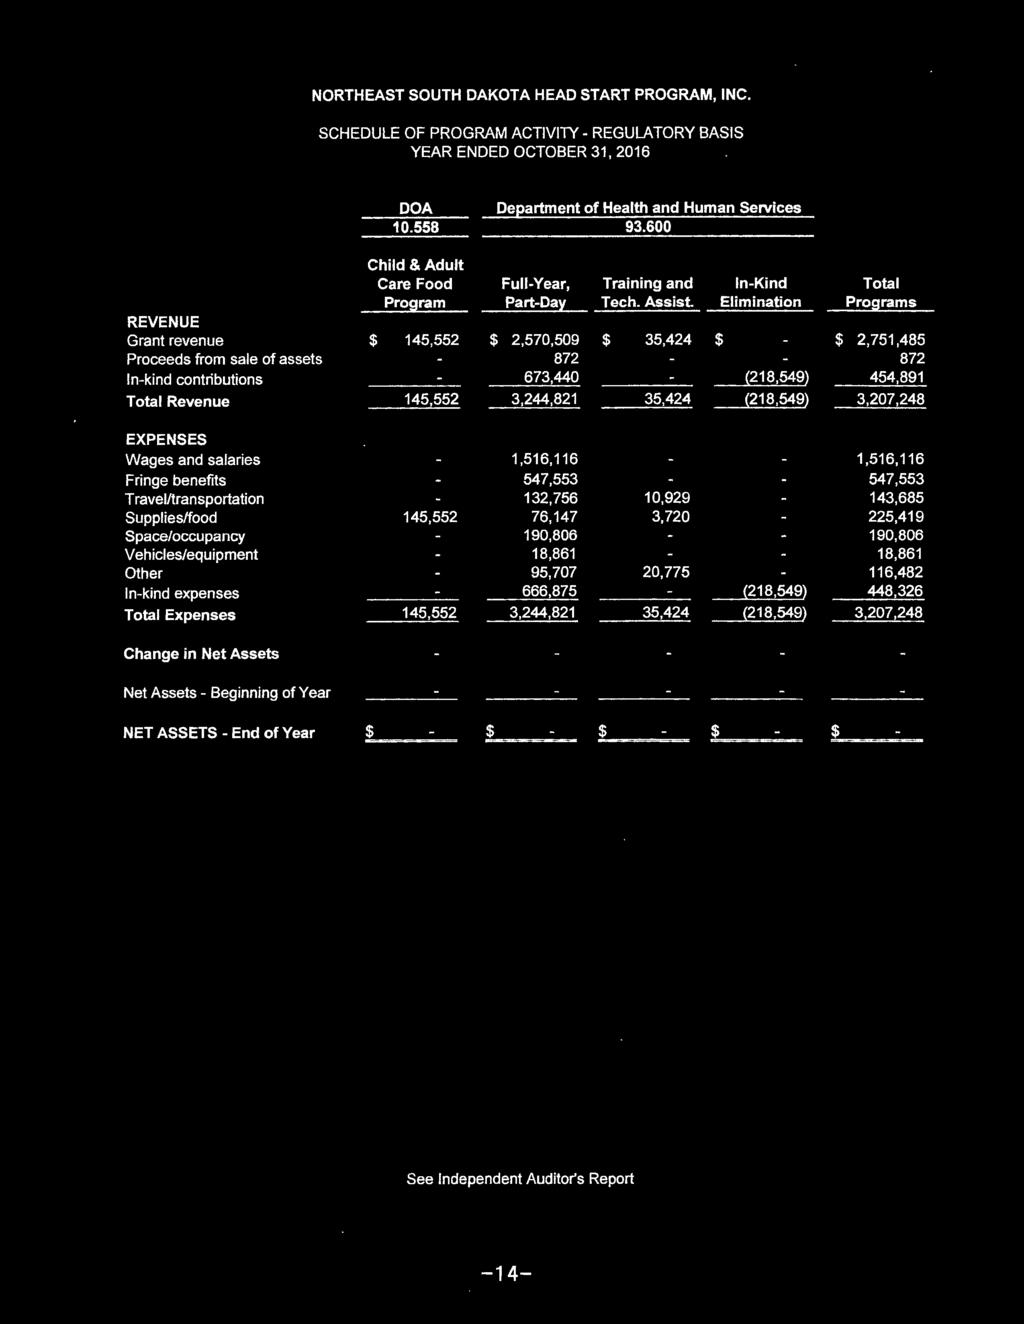 Elimination Programs REVENUE Grant revenue $ 145,552 $ 2,570,509 $ 35,424 $ $ 2,751,485 Proceeds from sale of assets 872 872 In-kind contributions 673,440 {218,549) 454,891 Total Revenue 145,552